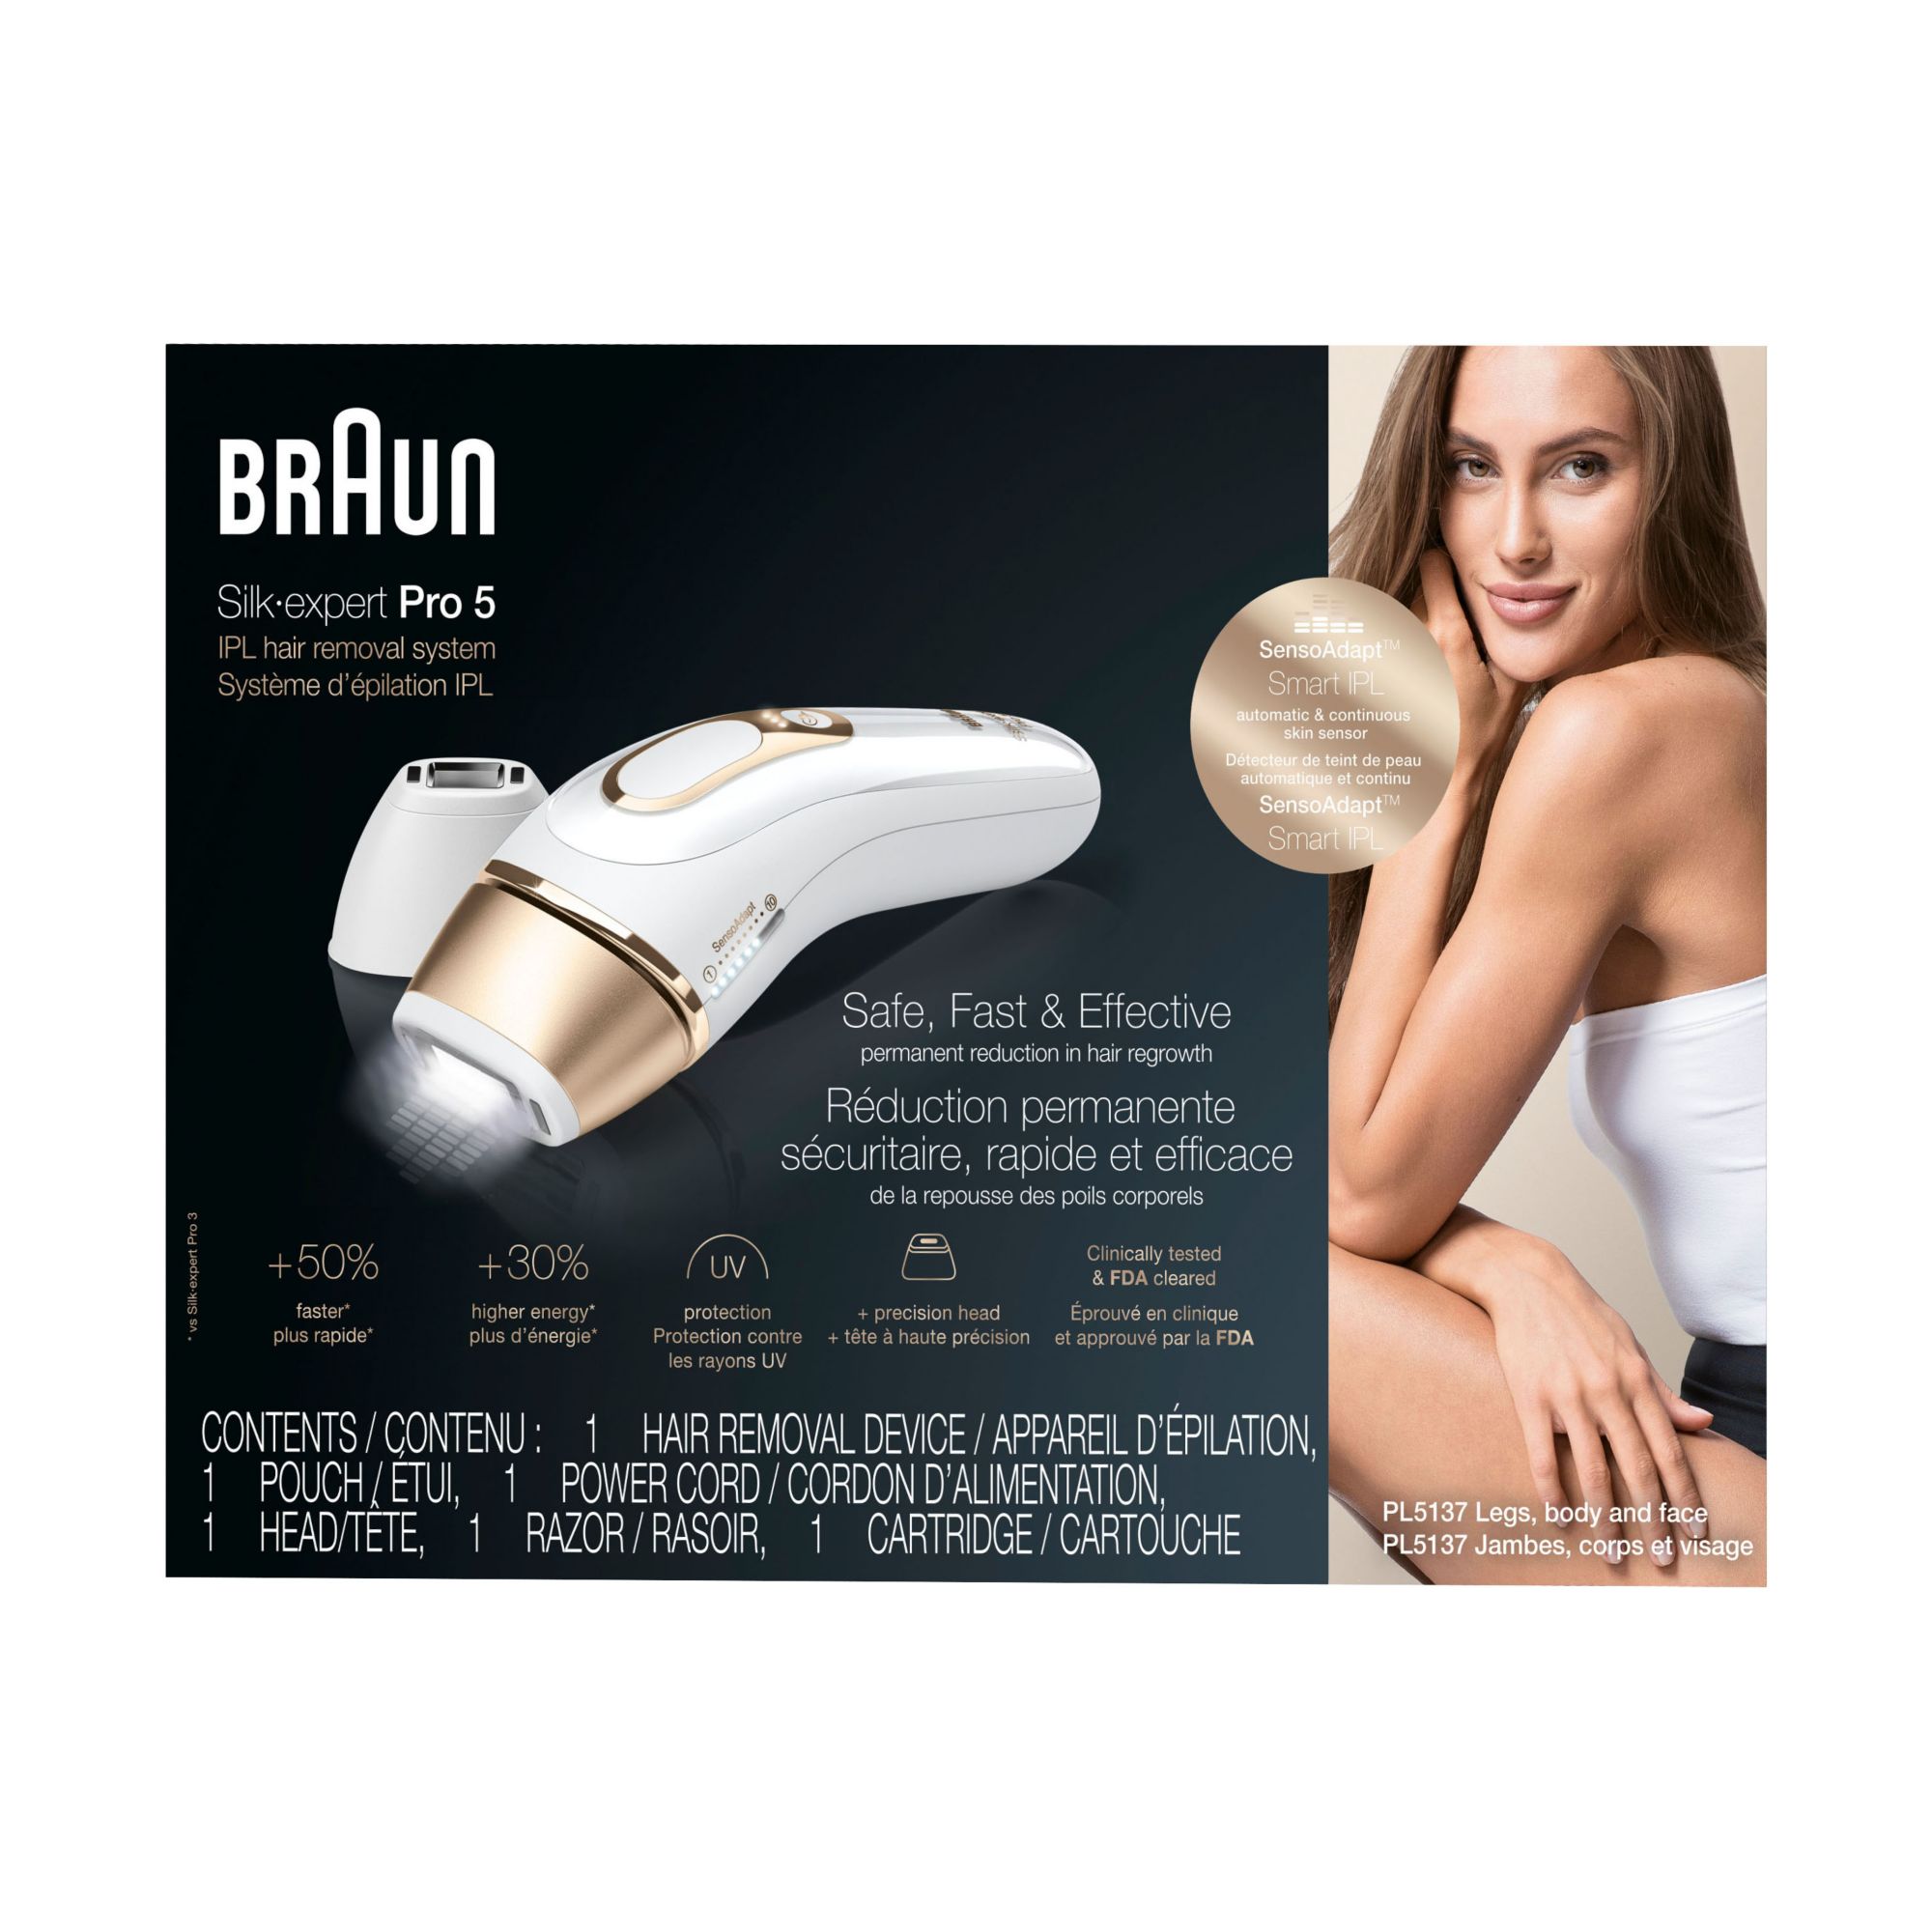 Braun Silk-expert Pro 5 IPL Hair Removal System PL5237 price in